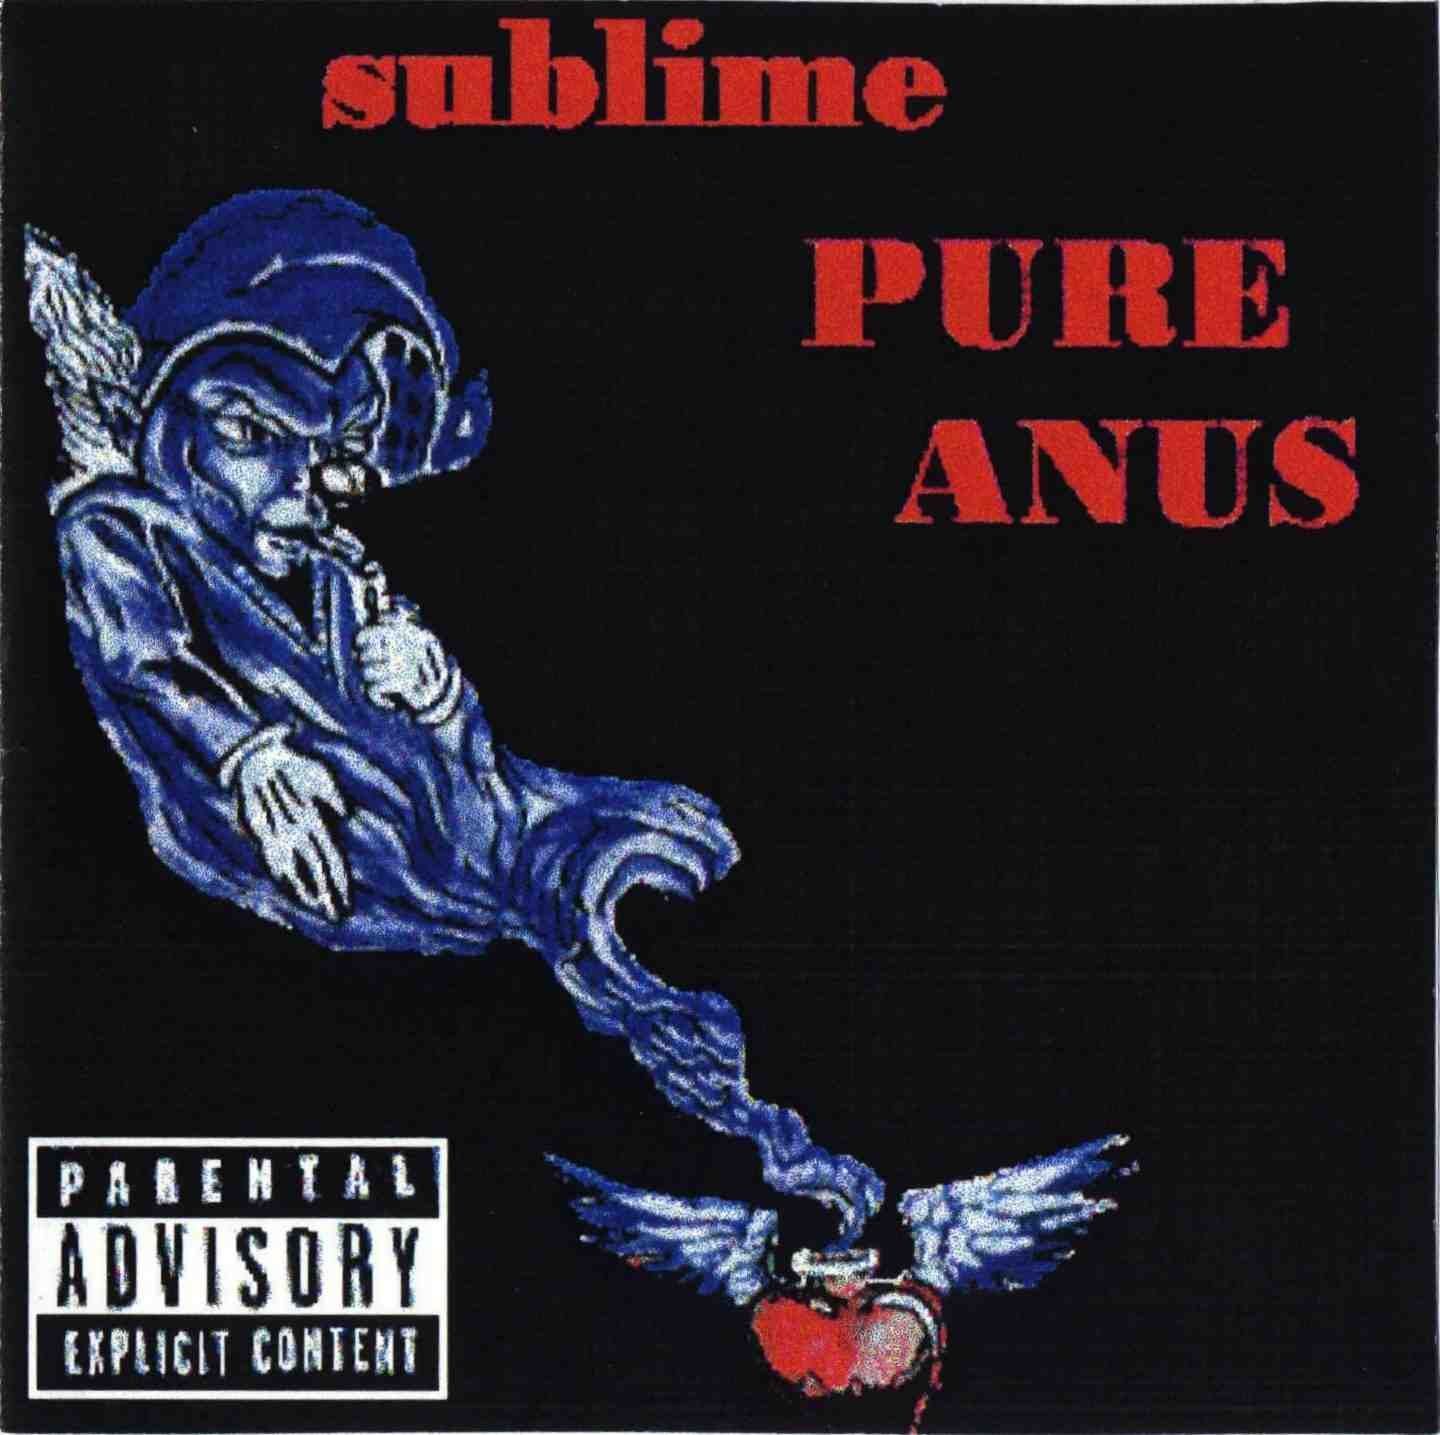 Sublime pure anus cover art